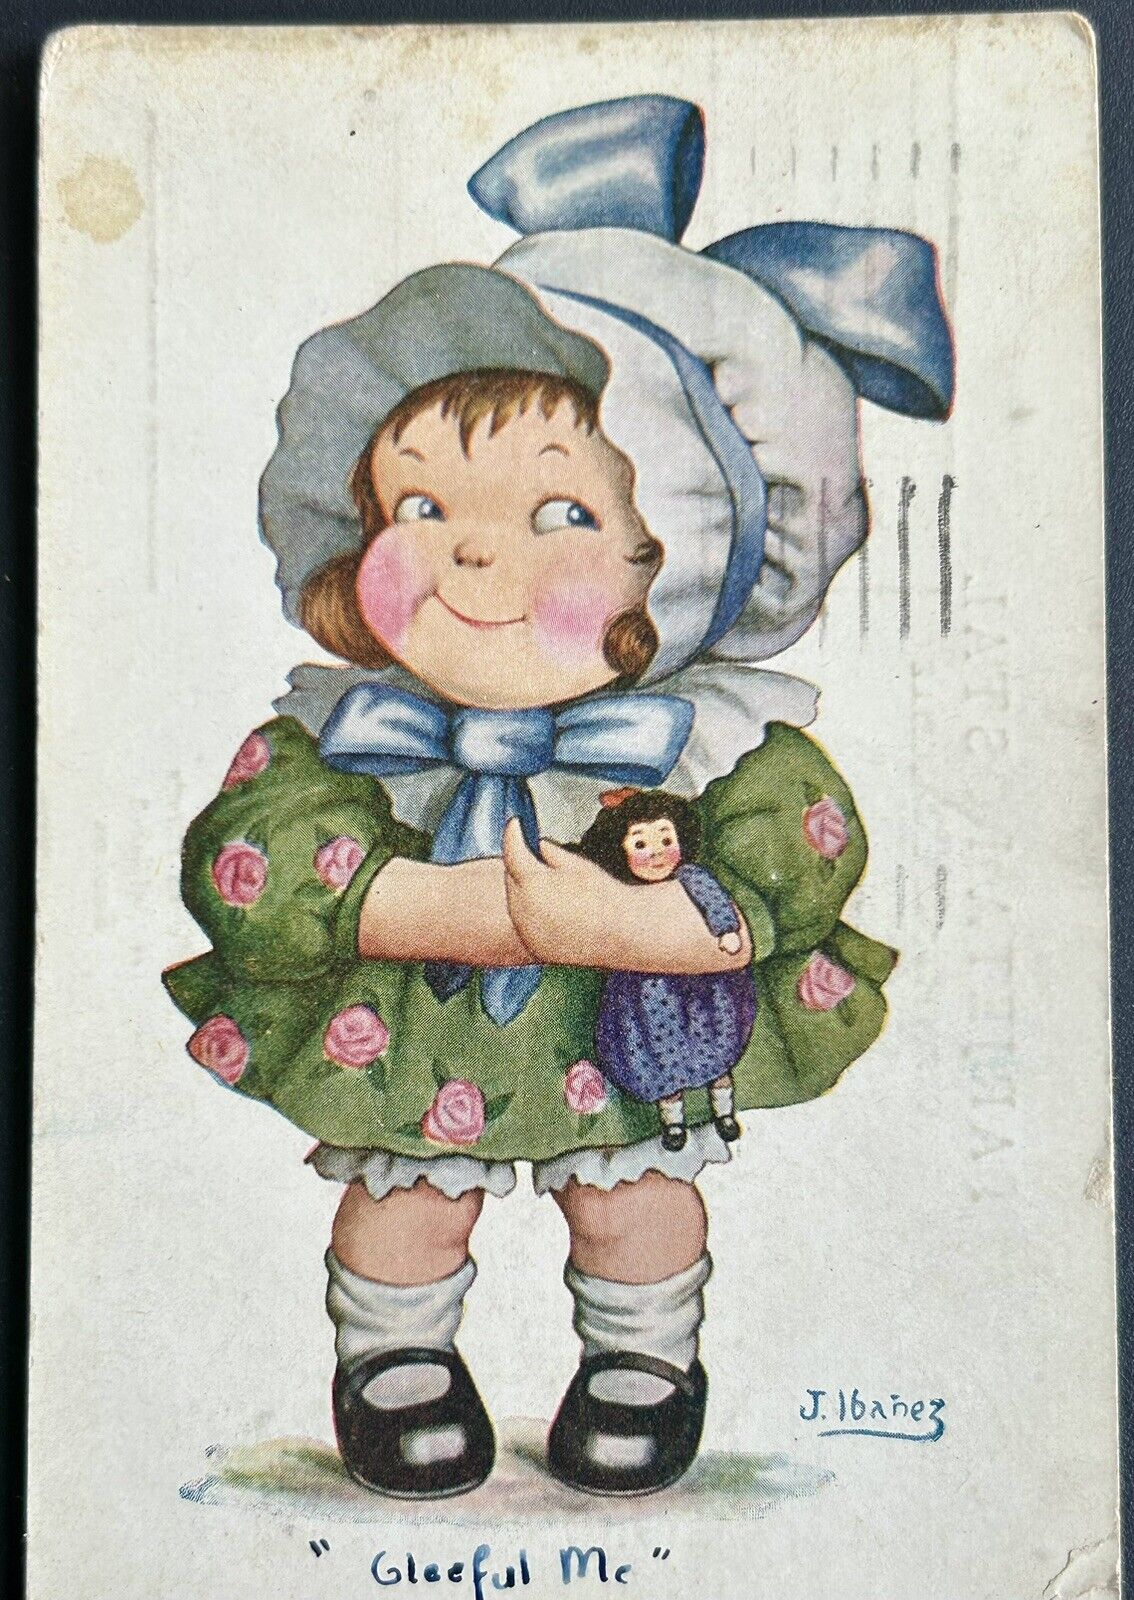 Gleeful Me. Vintage Doll Postcard. 1947